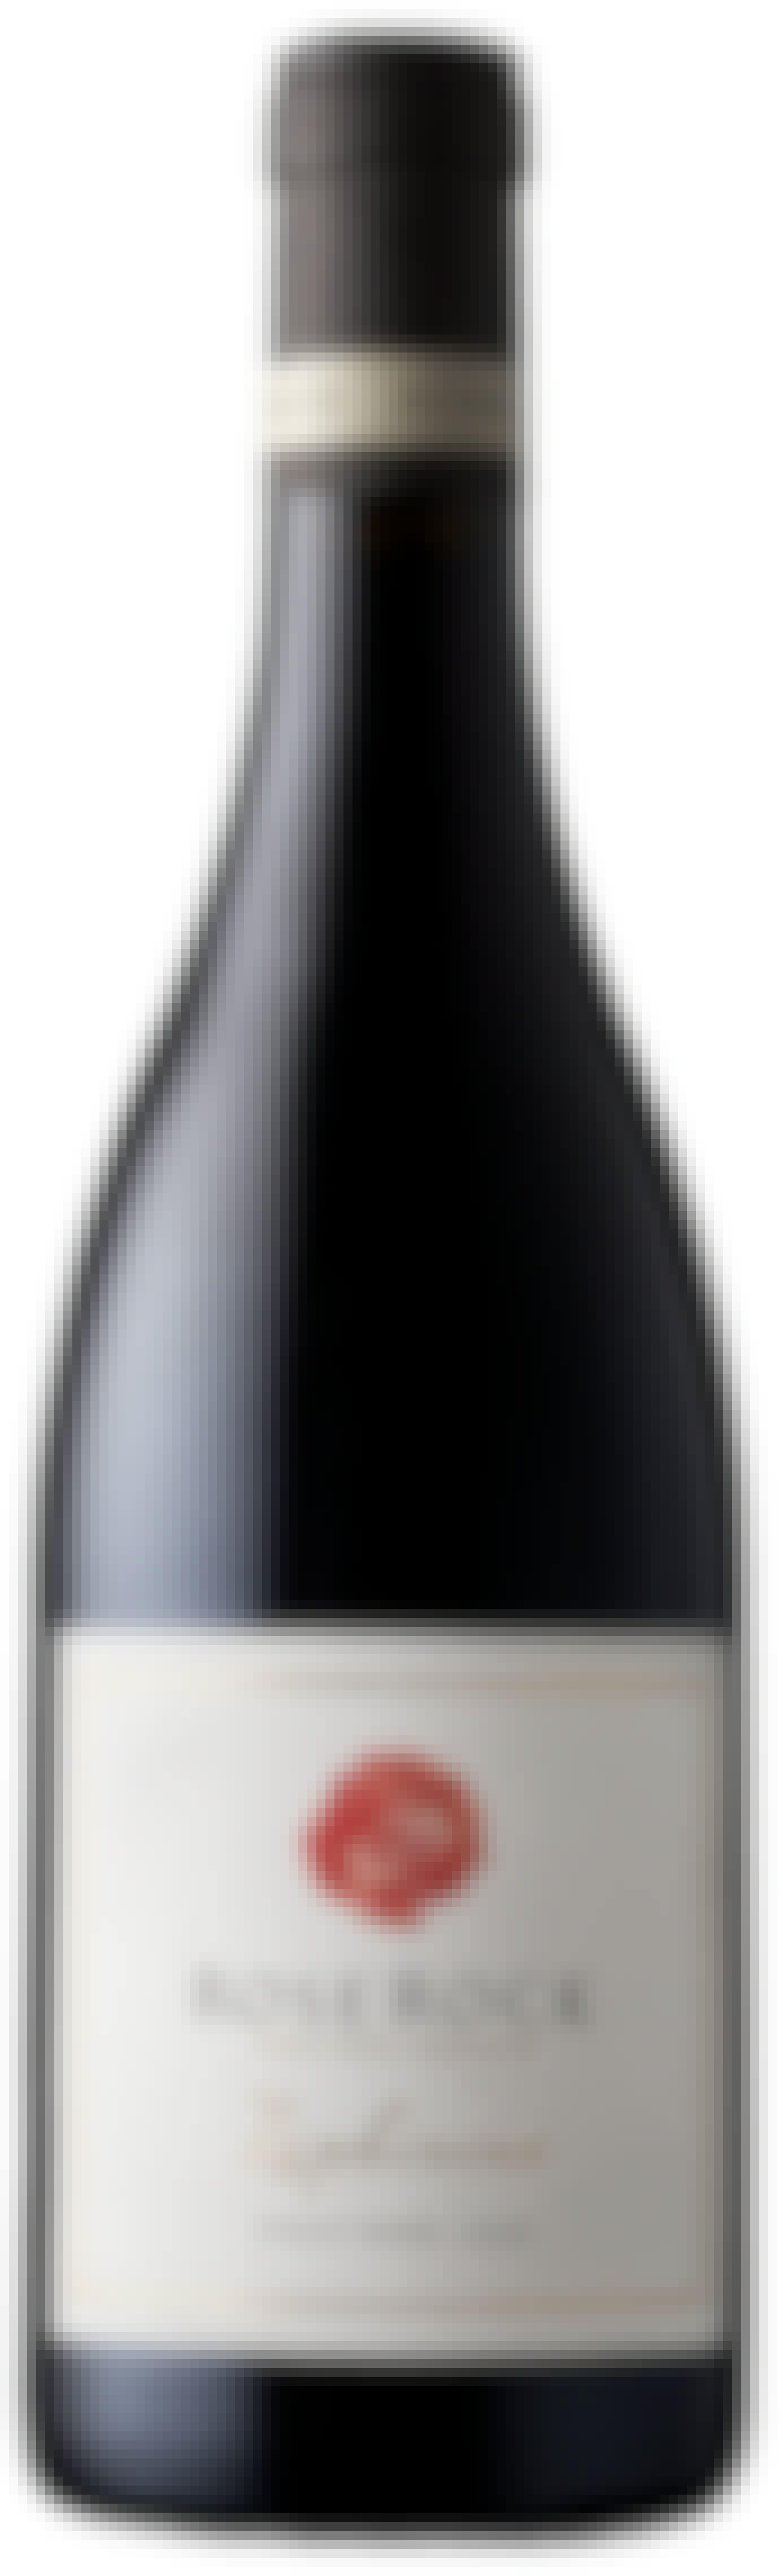 Roserock Zephirine Pinot Noir 2019 750ml